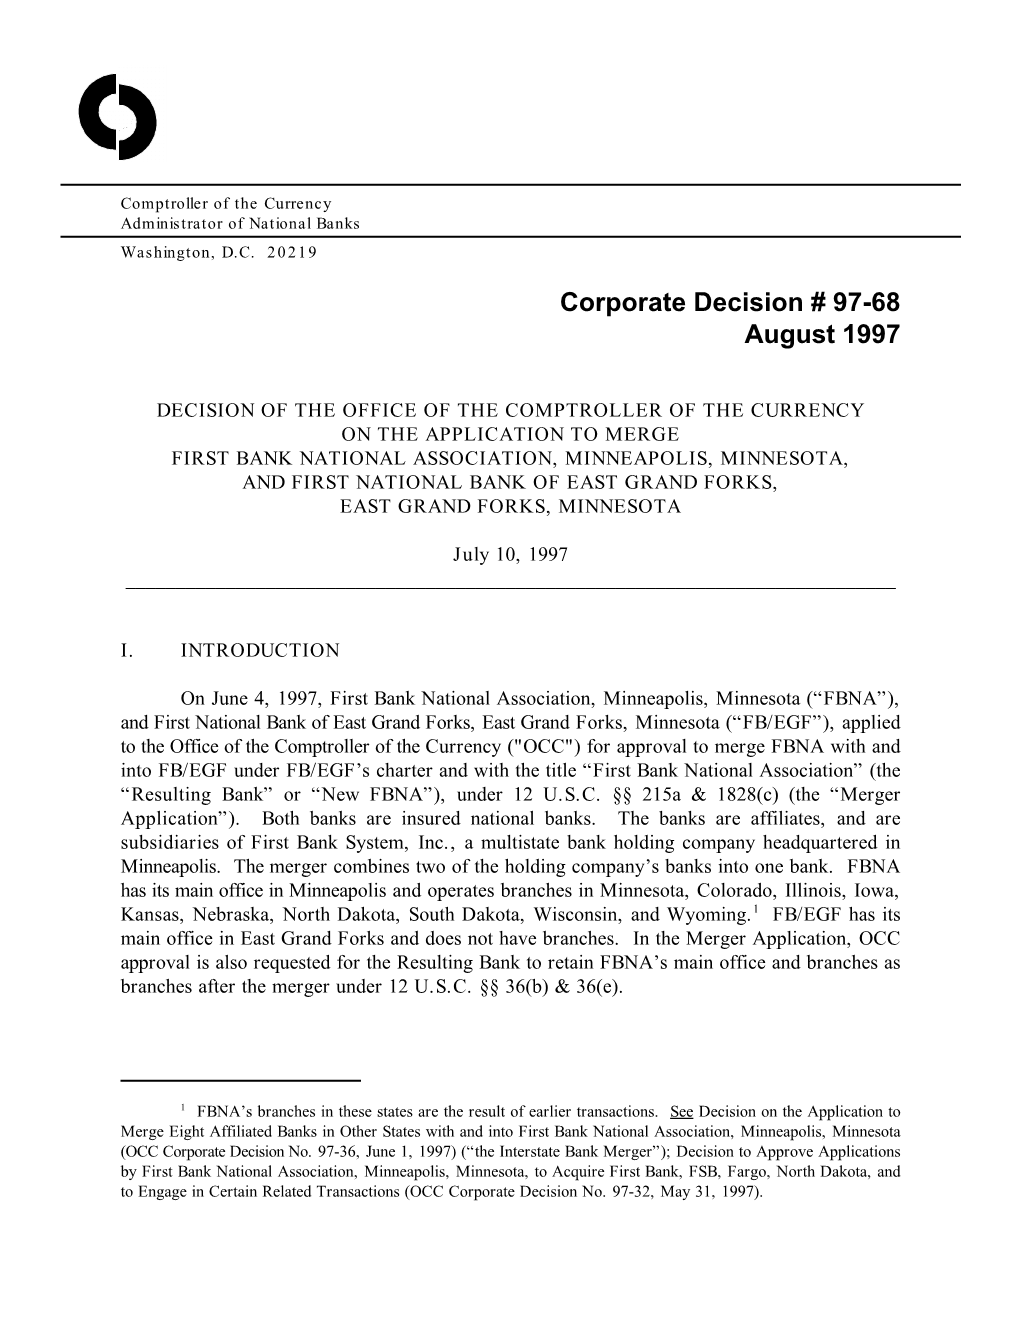 Corporate Decision # 97-68 August 1997